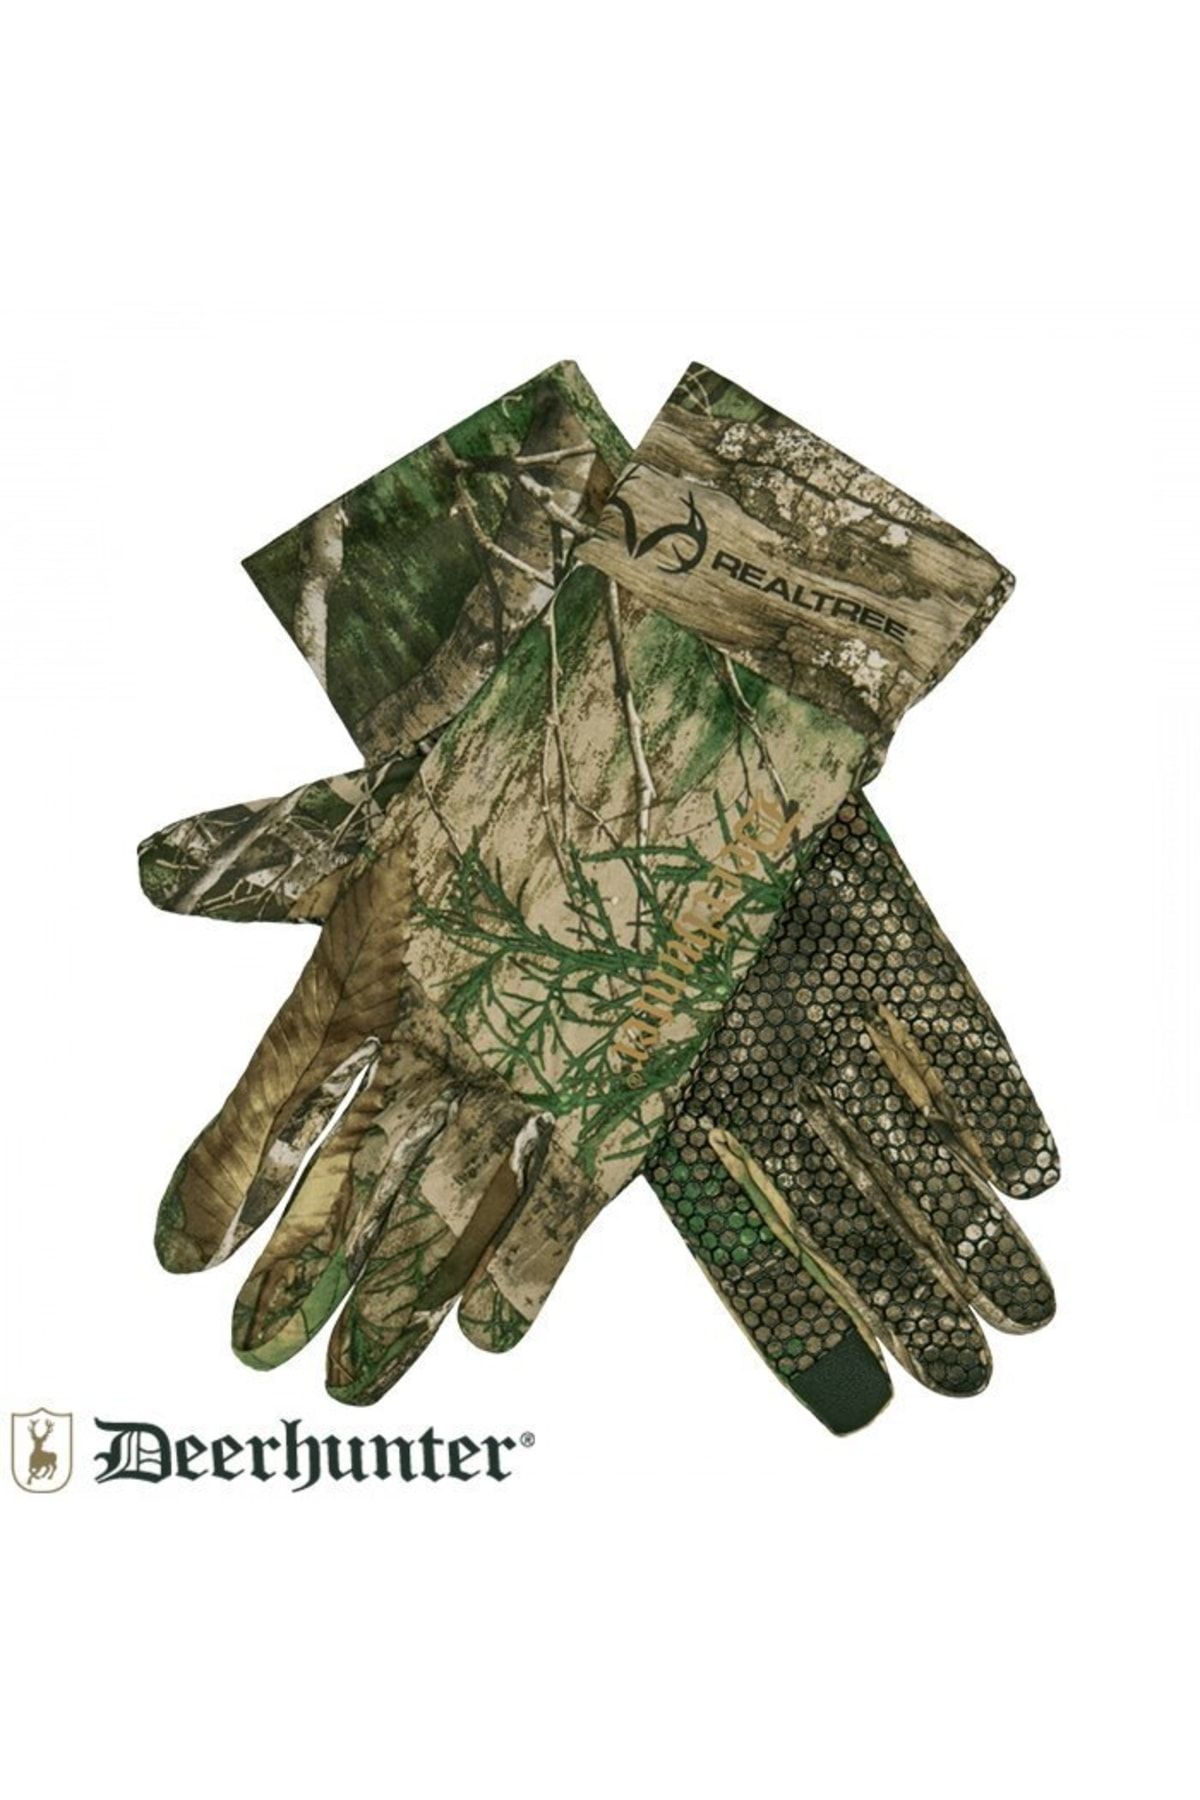 Deerhunter Orman Desenli Kamuflajlı Eldiven Xl/2xl